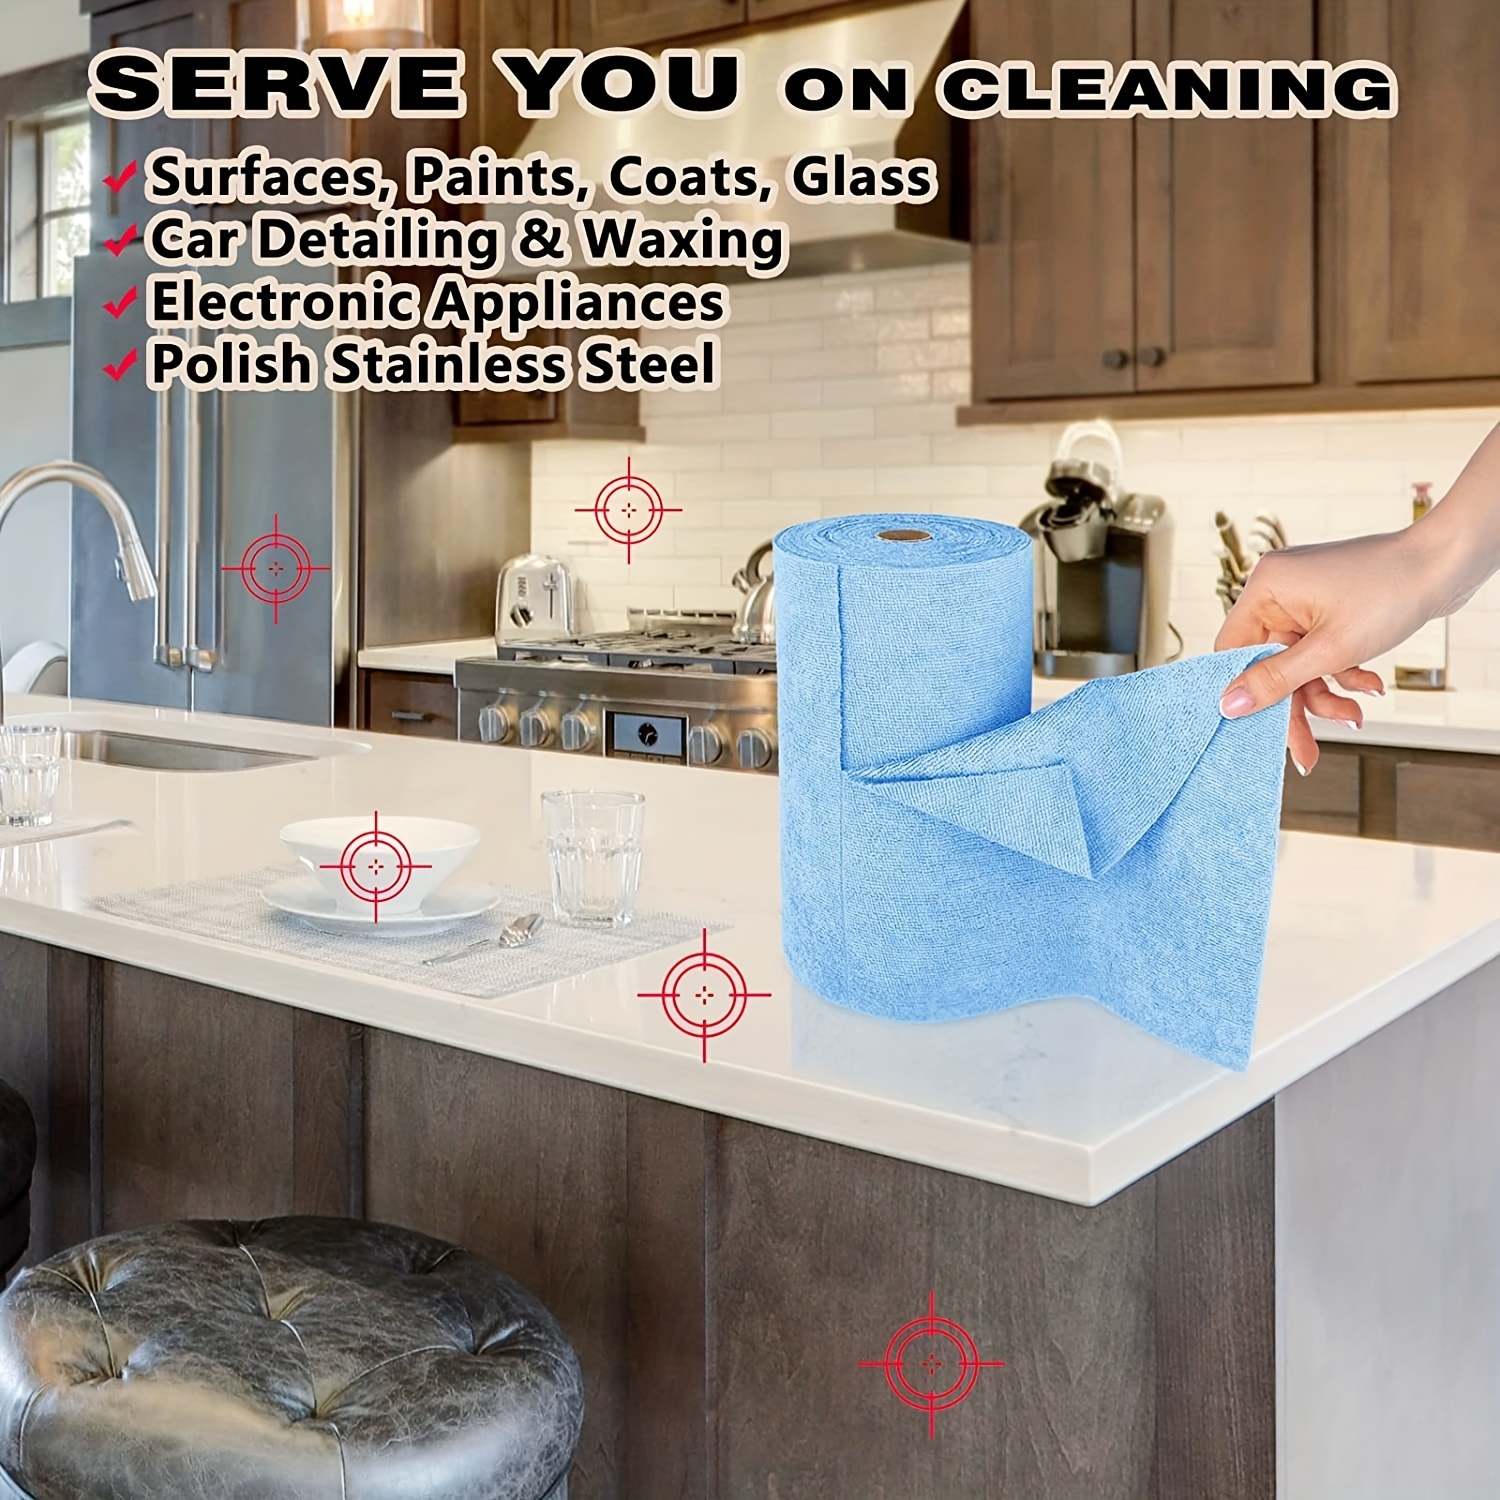 Kitchen Towel Microfiber Cloth Reusable Hand Towels Magic Cleaning